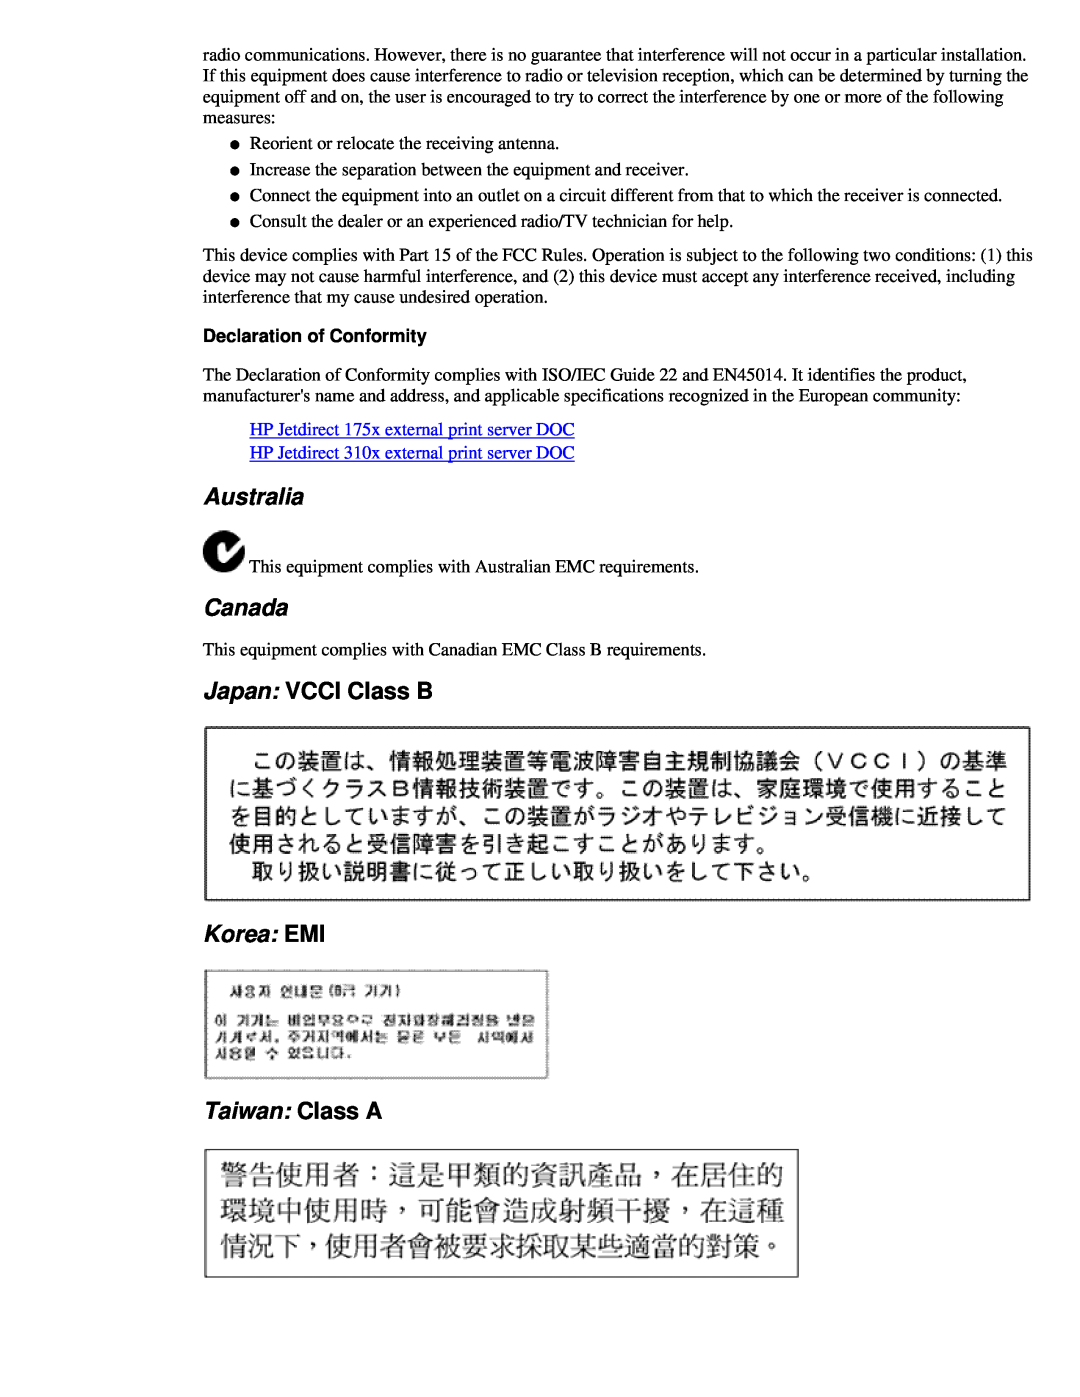 HP 175X, 310X manual Australia, Canada, Japan VCCI Class B, Korea EMI, Taiwan Class A, Declaration of Conformity 